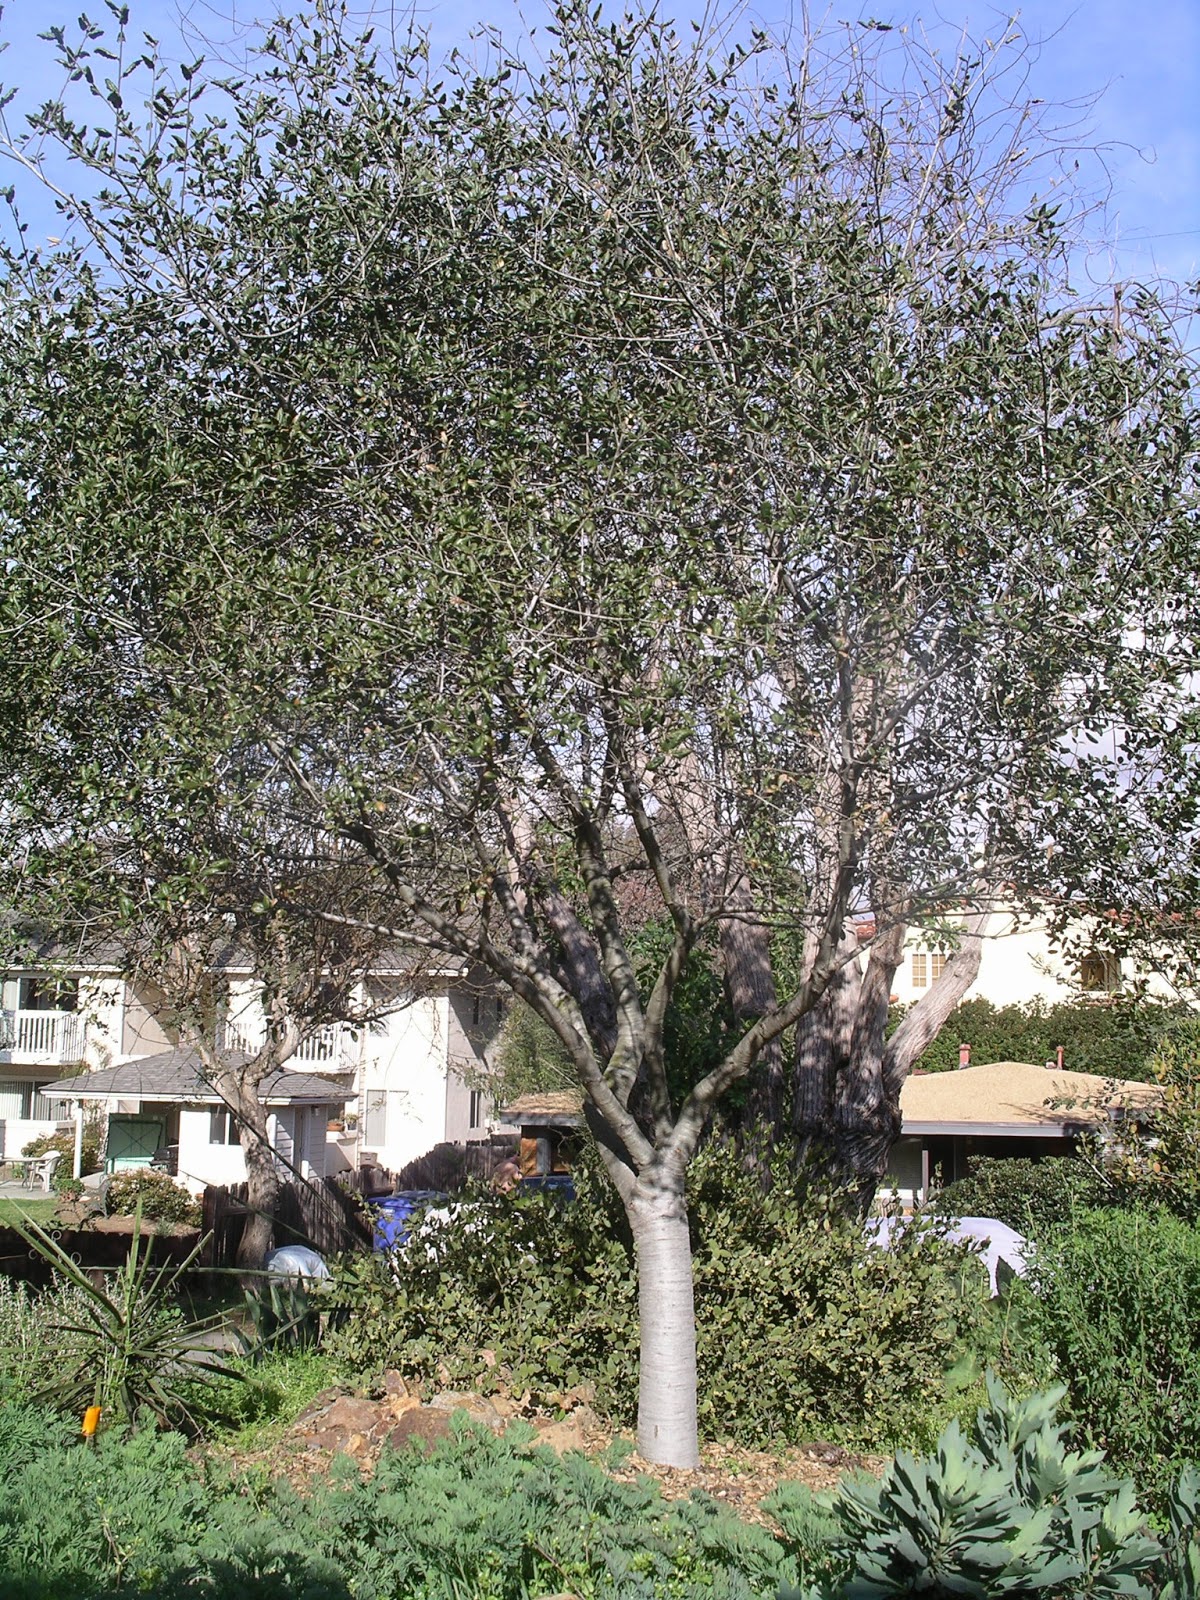 A California Native Plant Garden in San Diego County: Coast Live Oak